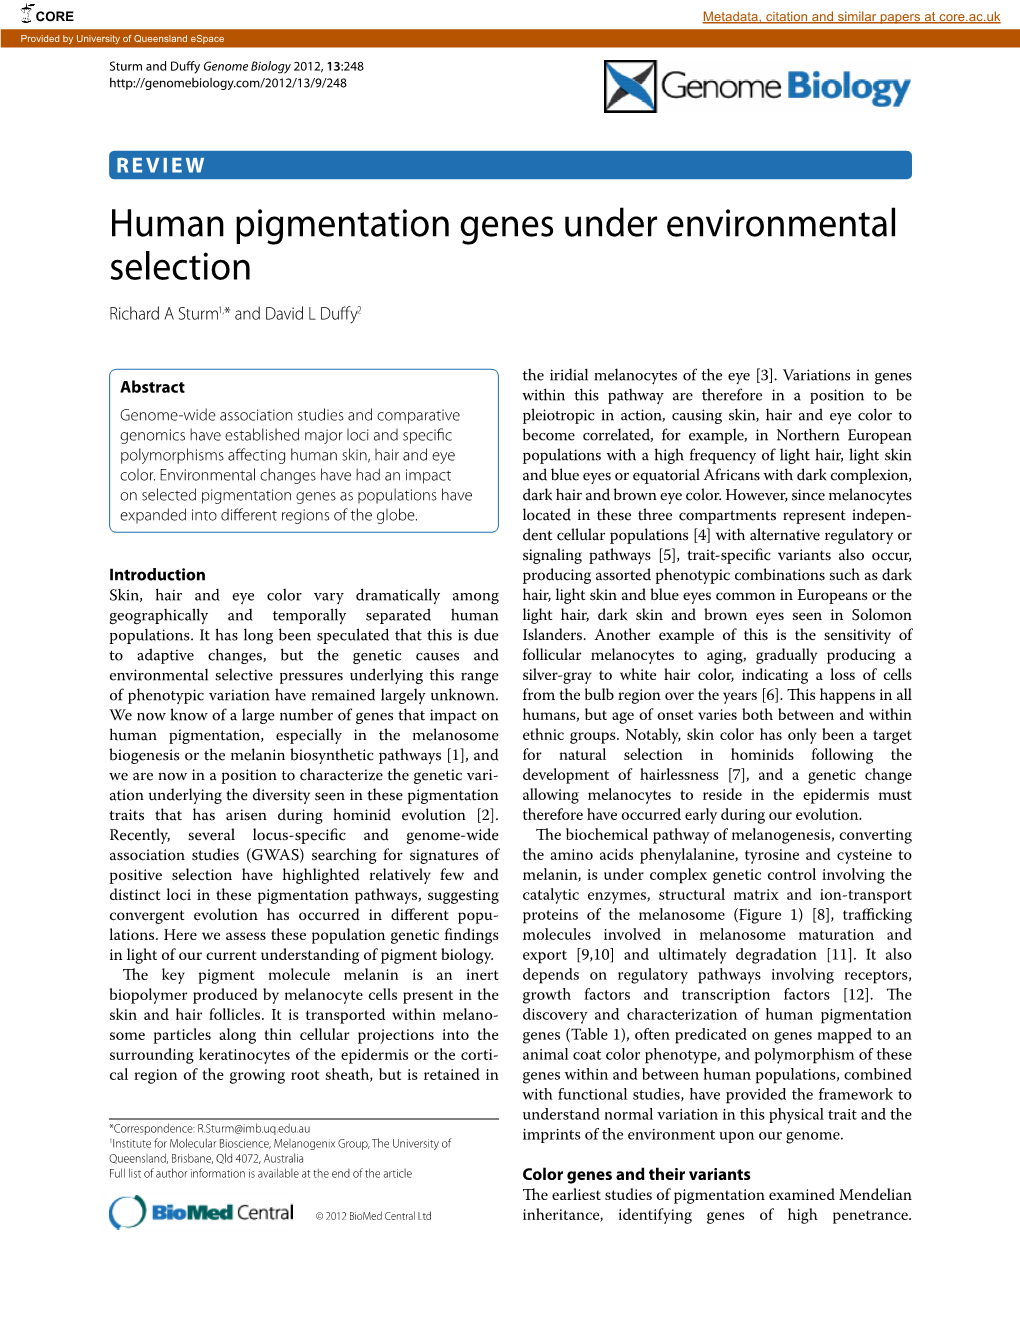 Human Pigmentation Genes Under Environmental Selection Richard a Sturm1,* and David L Duffy2